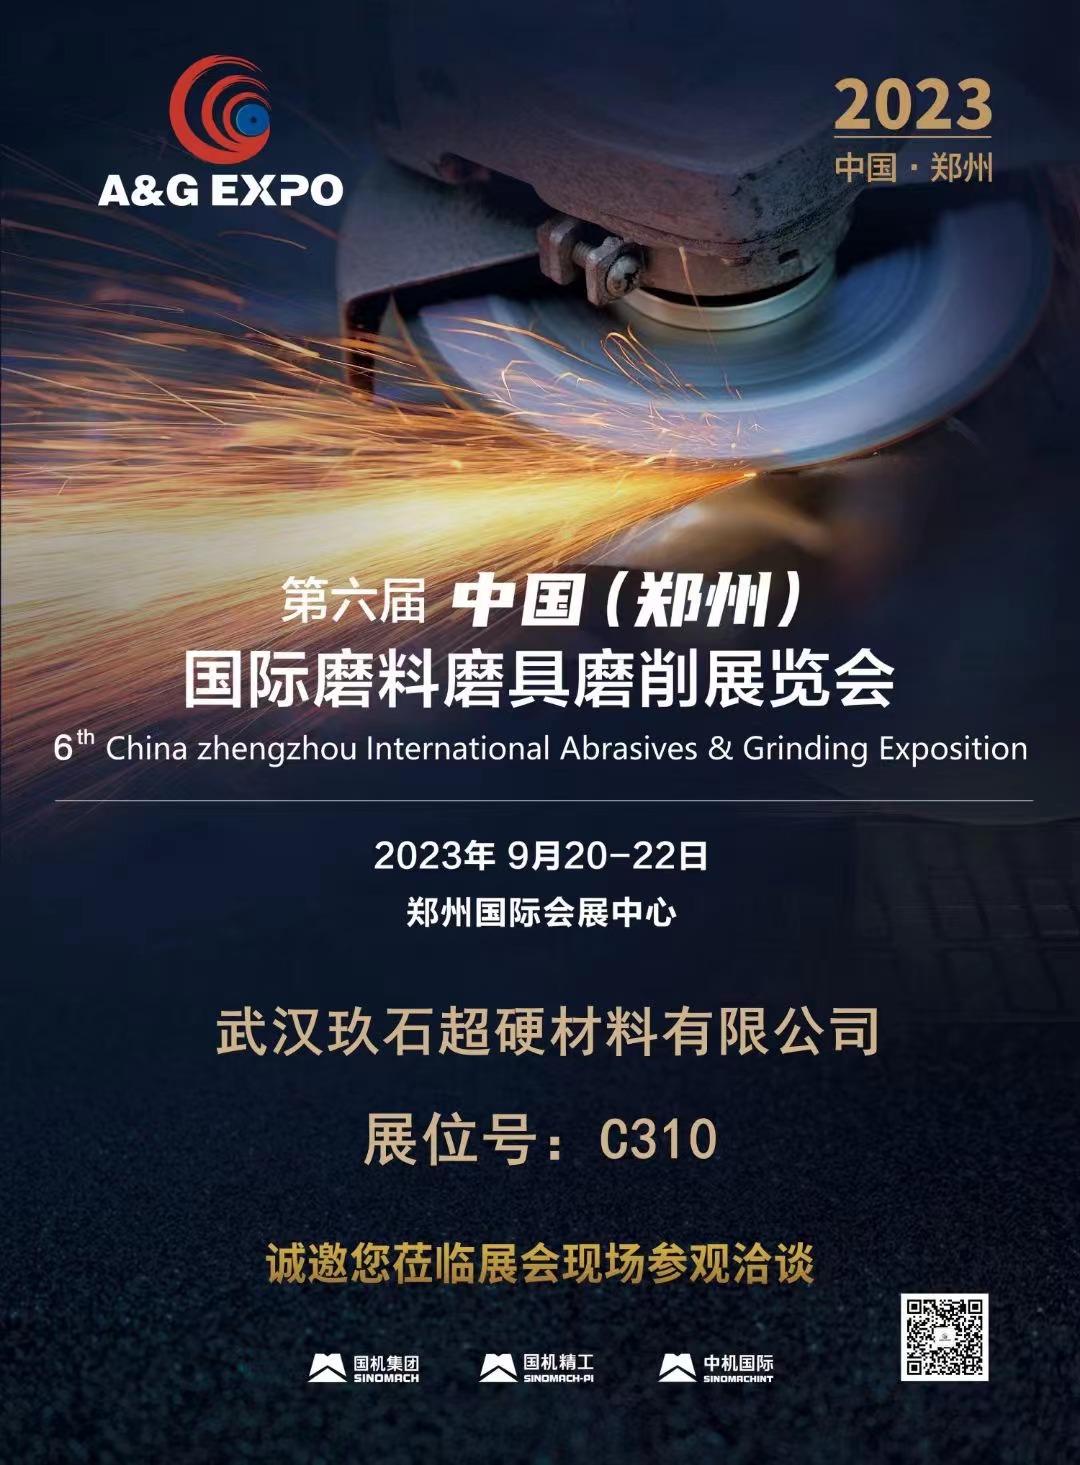 6th China zhengzhou lnternational Abrasives & Grinding Exposition